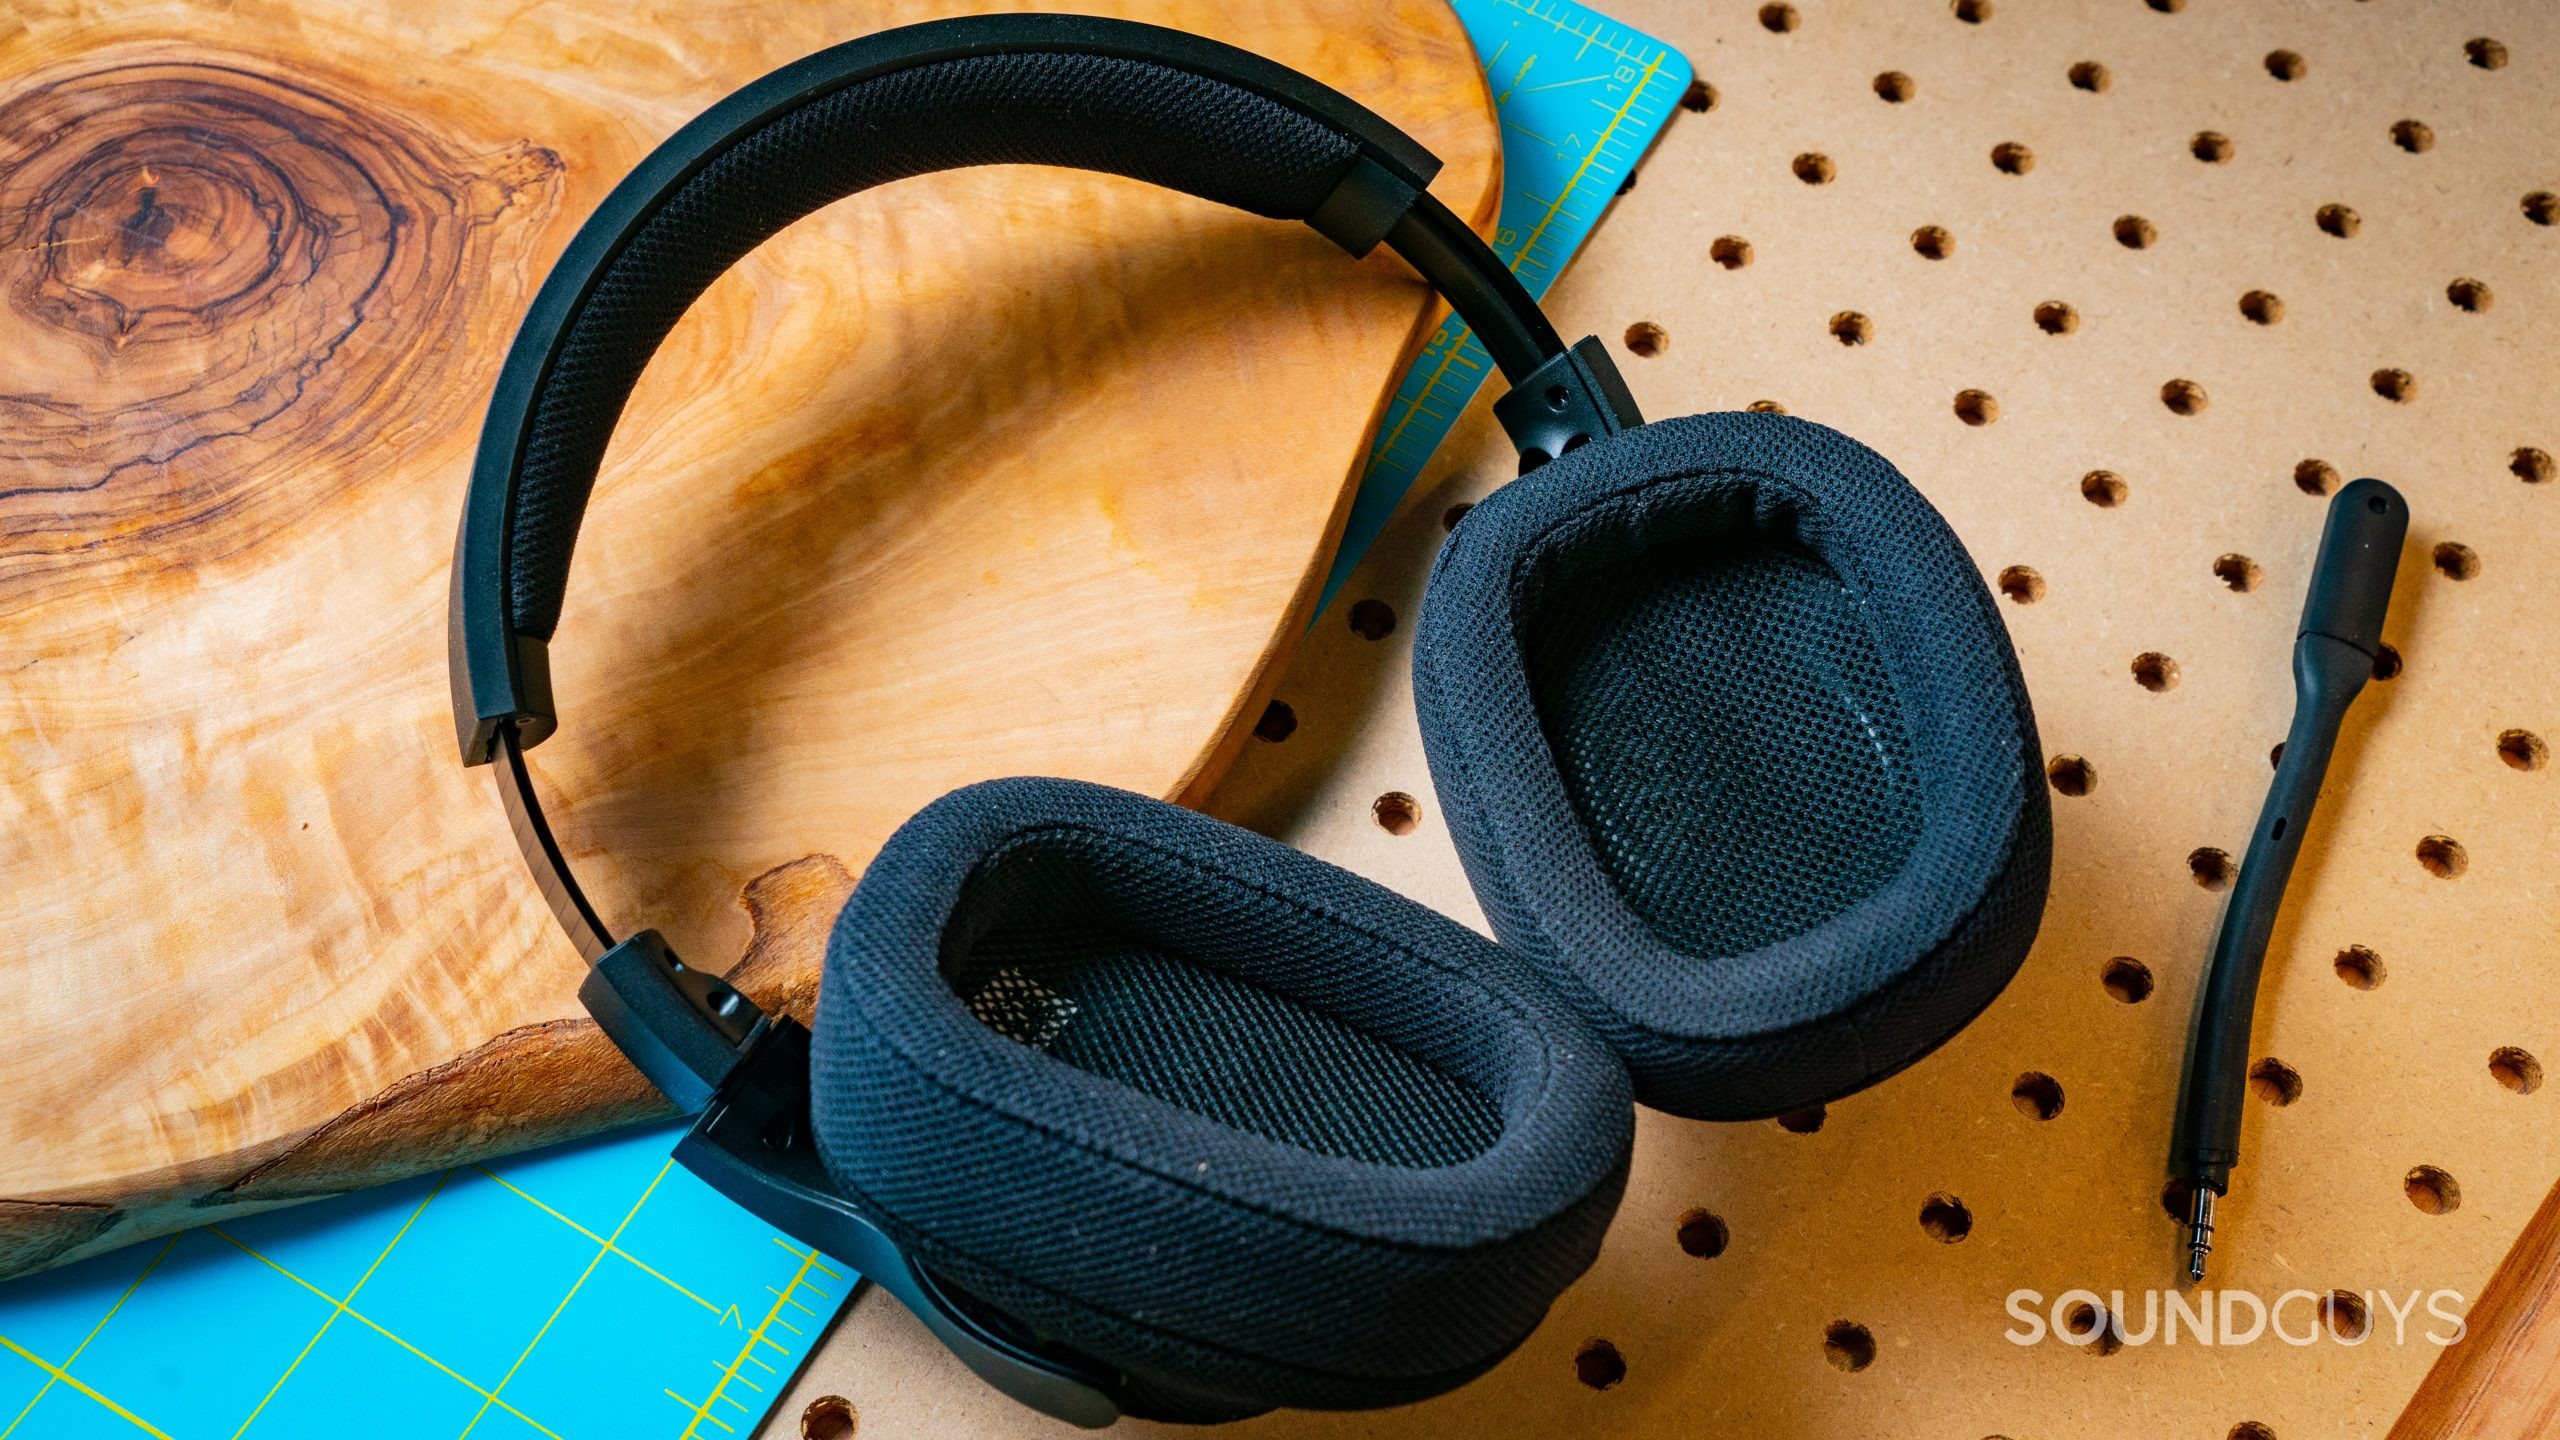 Logitech G433 headset review - SoundGuys